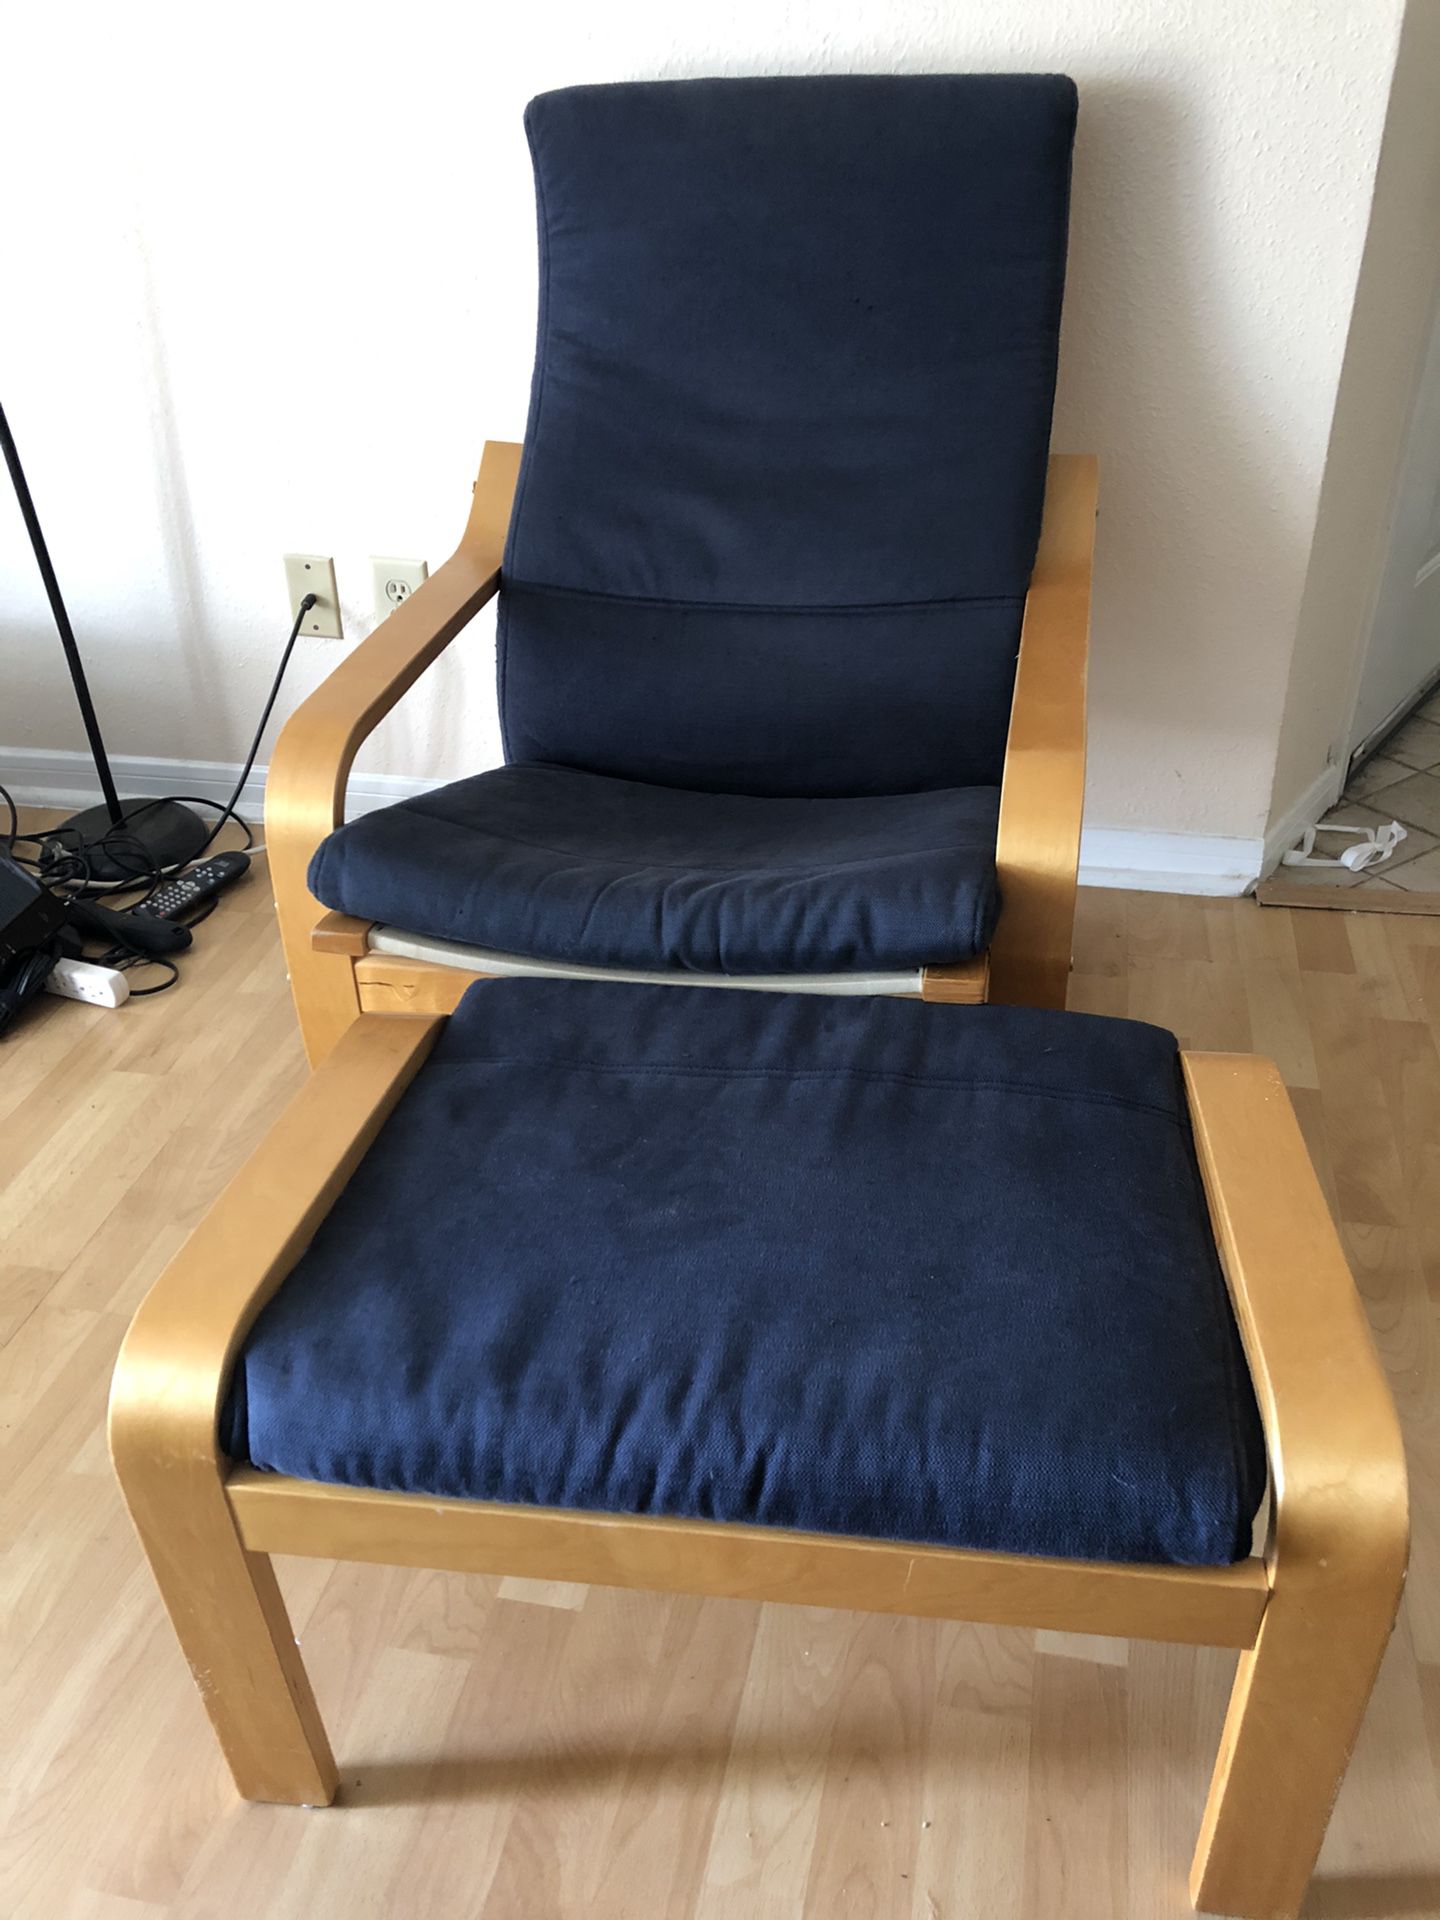 IKEA poang chair